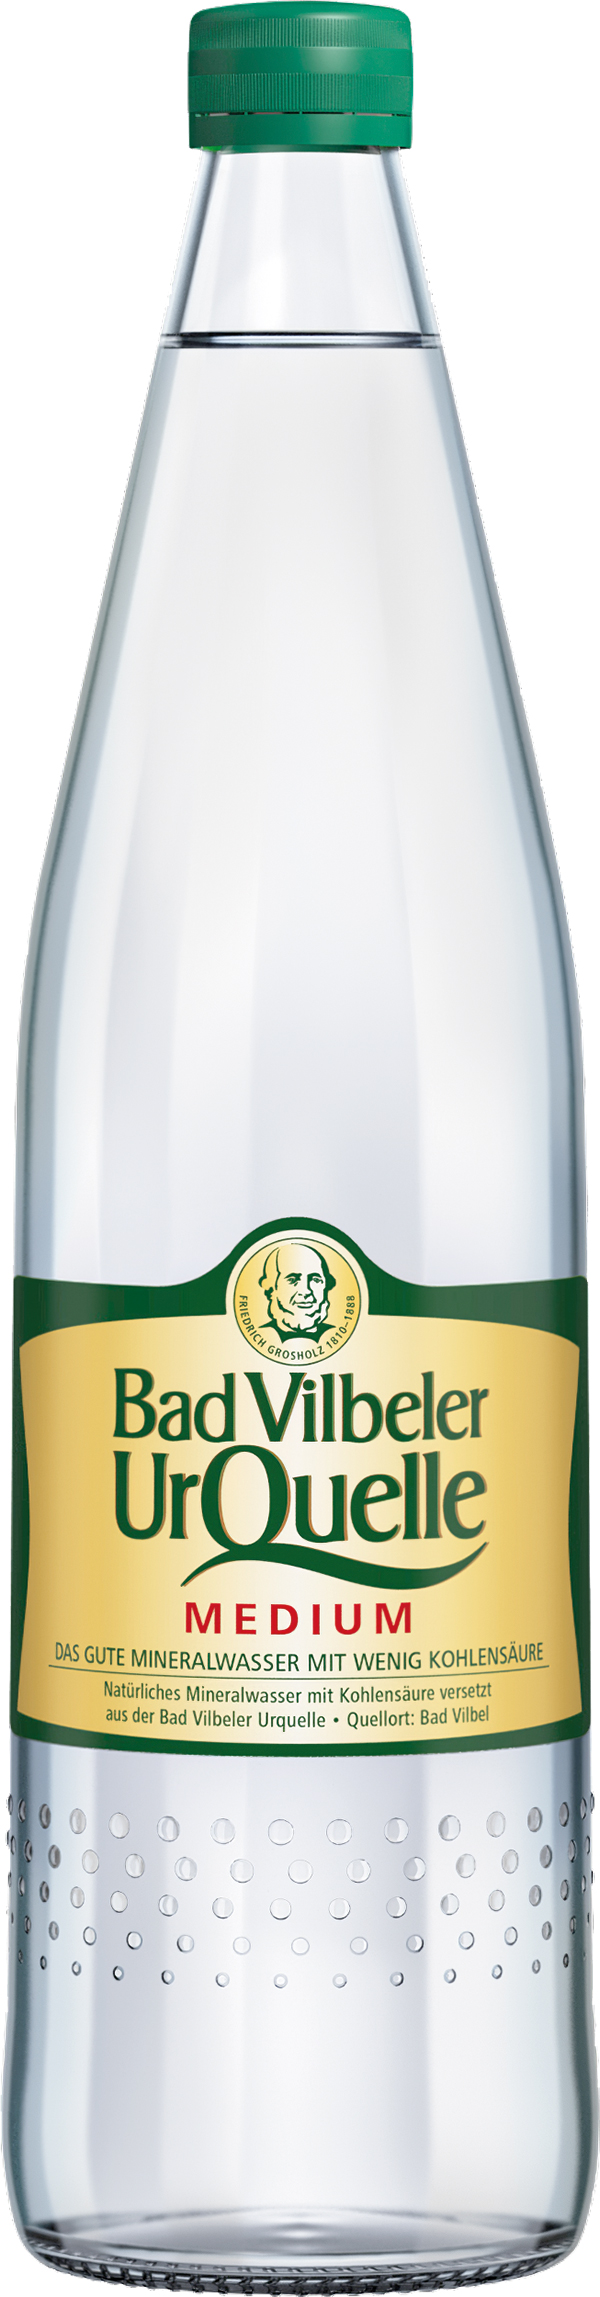 Bad Vilbeler Urquelle medium 12 x 0,75 l (Glas)